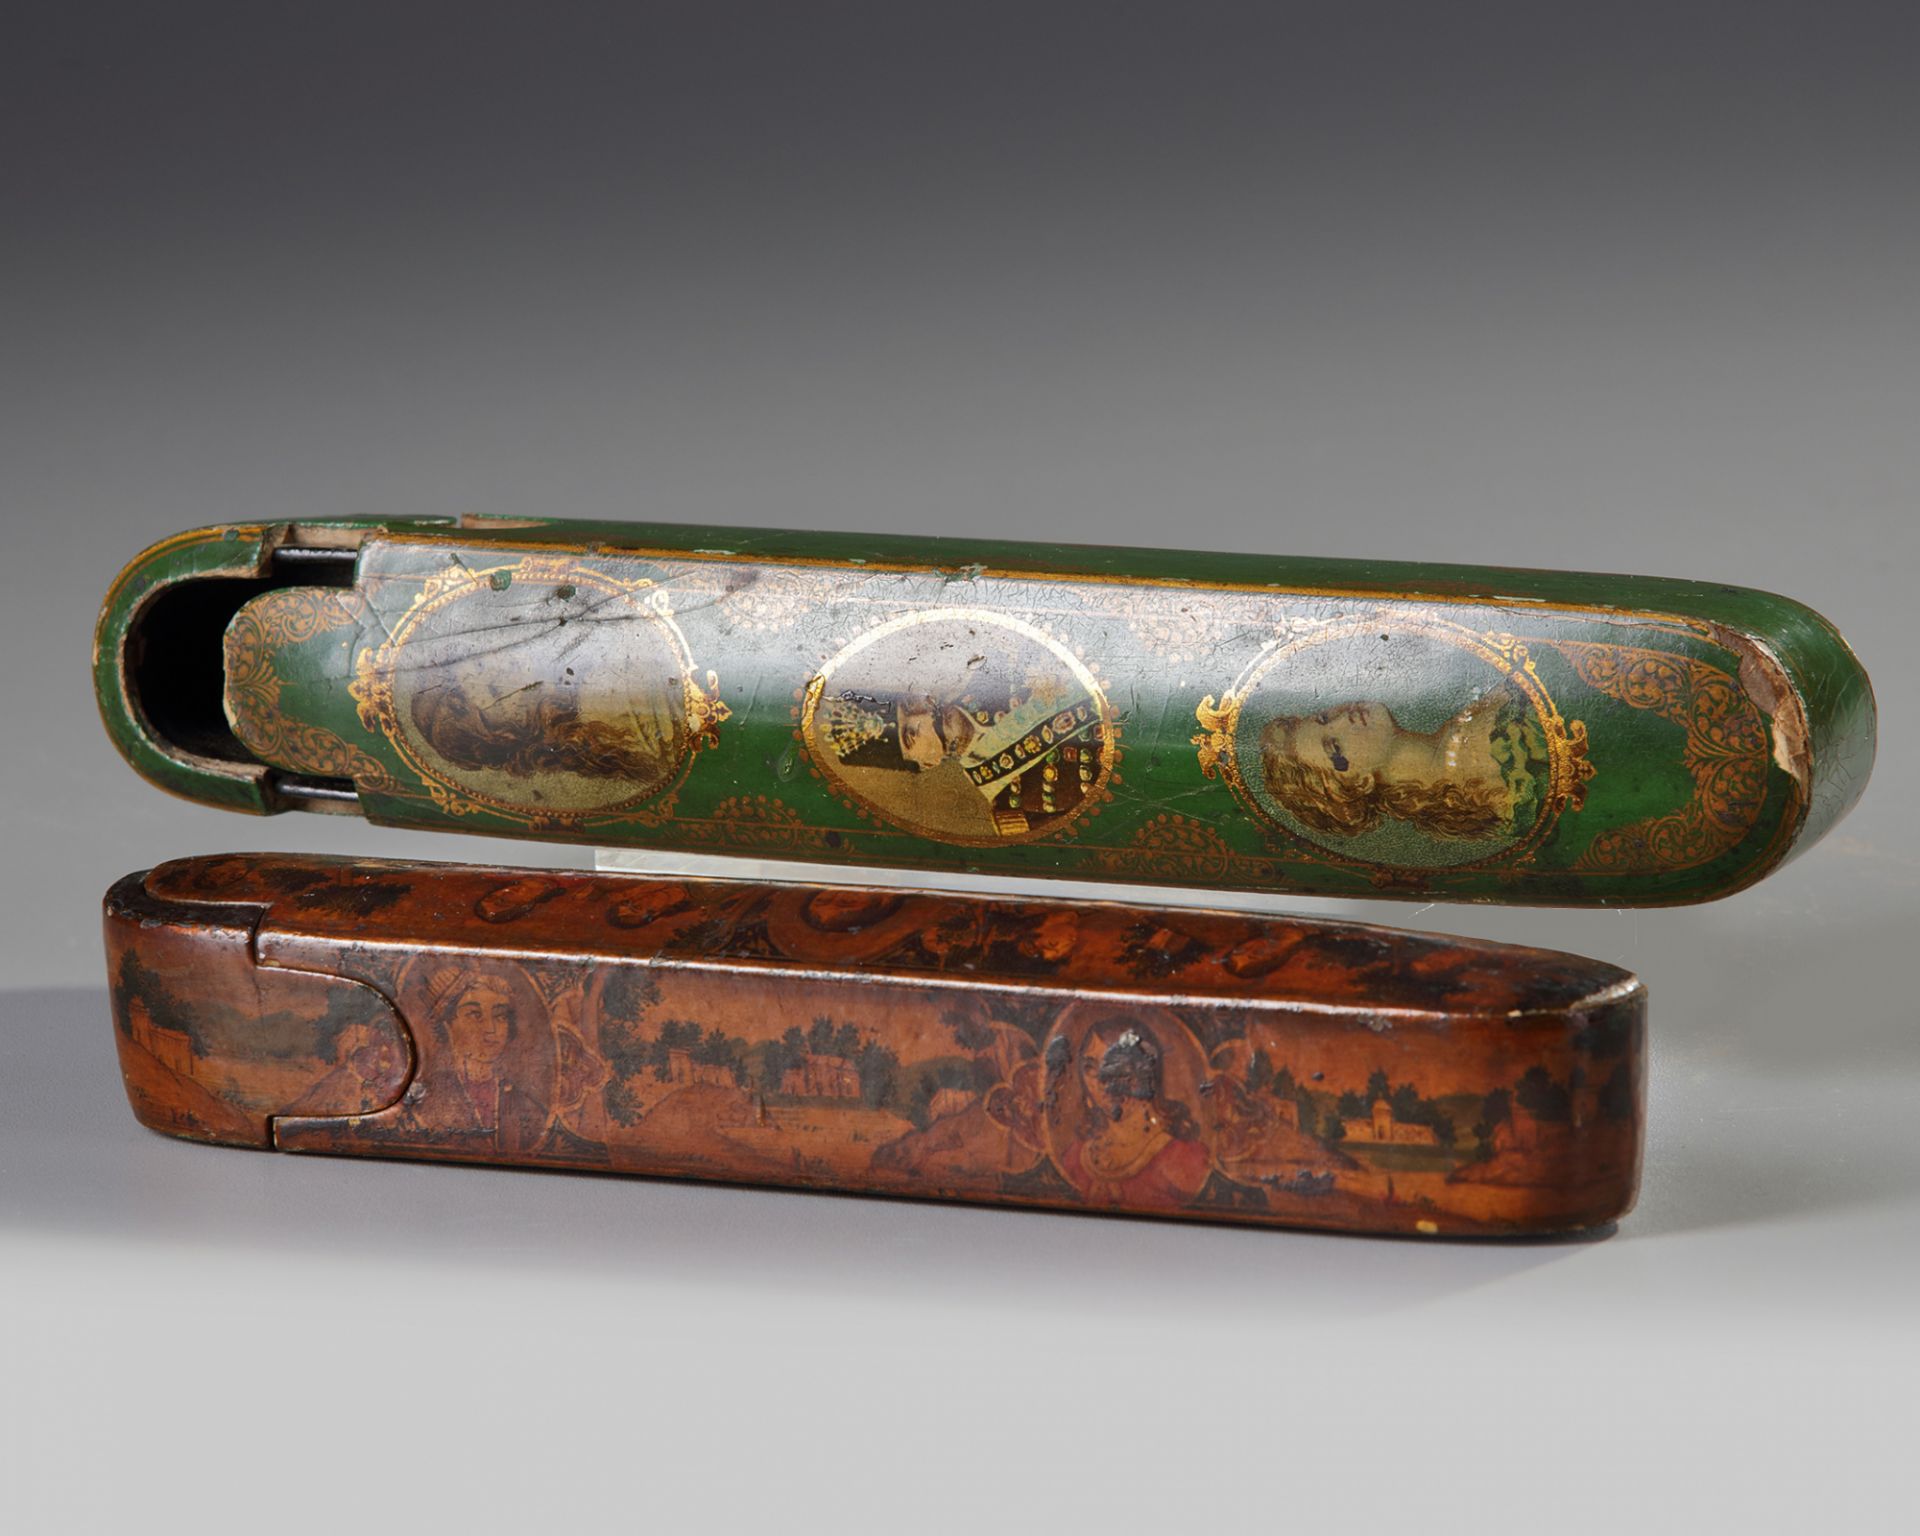 Two Ottoman lacquer paper mache pen cases